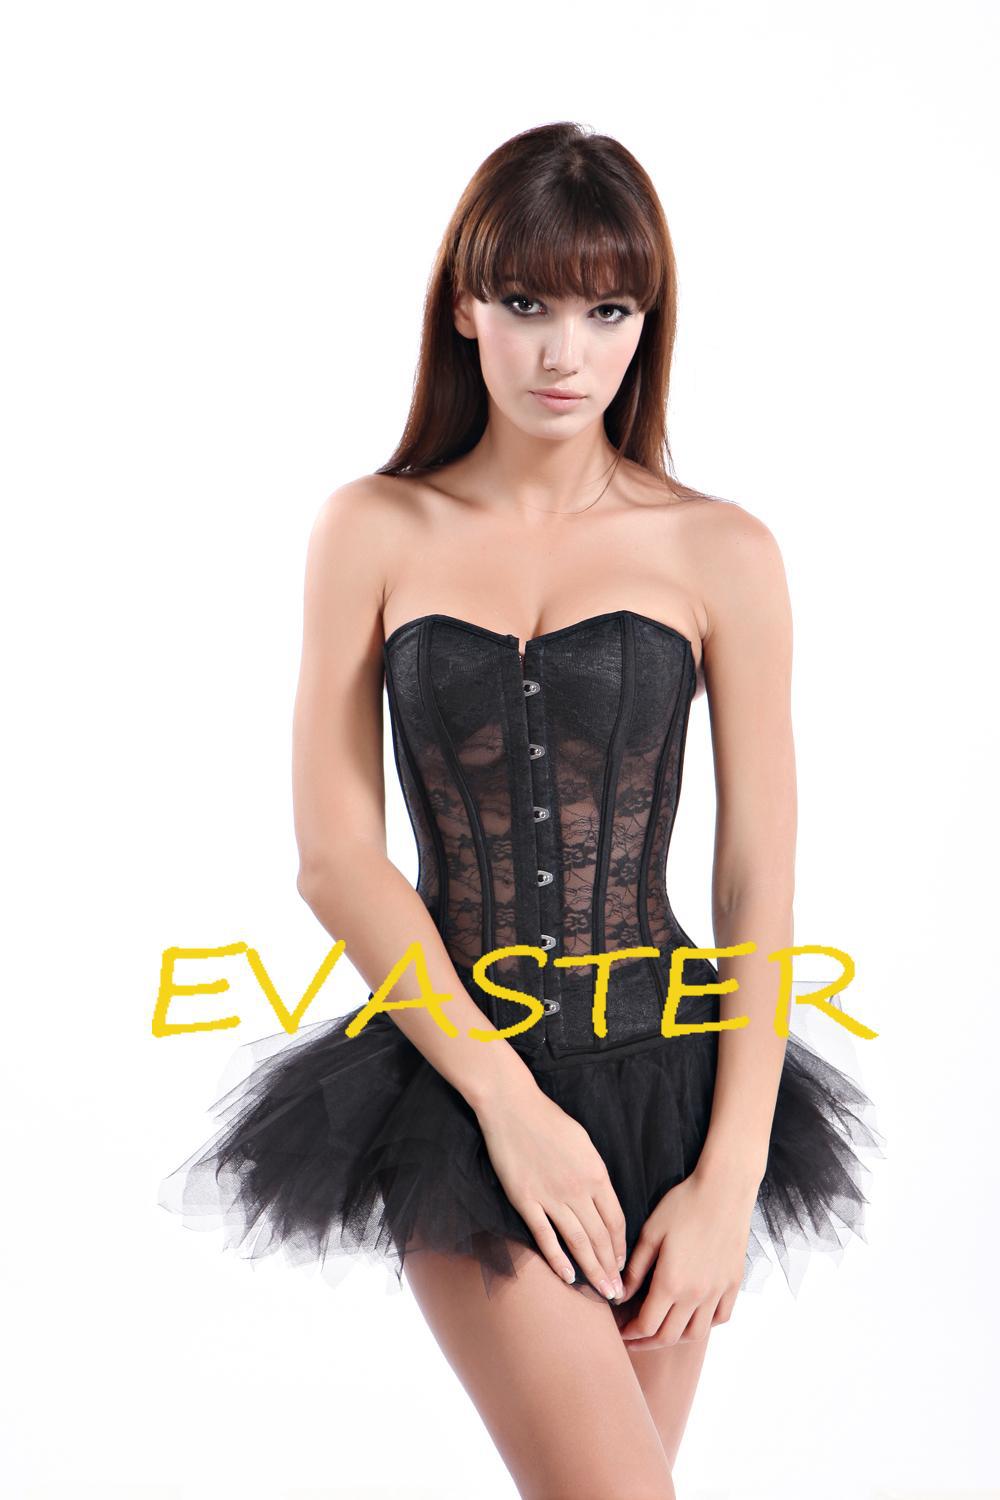 see through hotsale Strapless Black Lace woman sexy corset set wih Pettiskirt